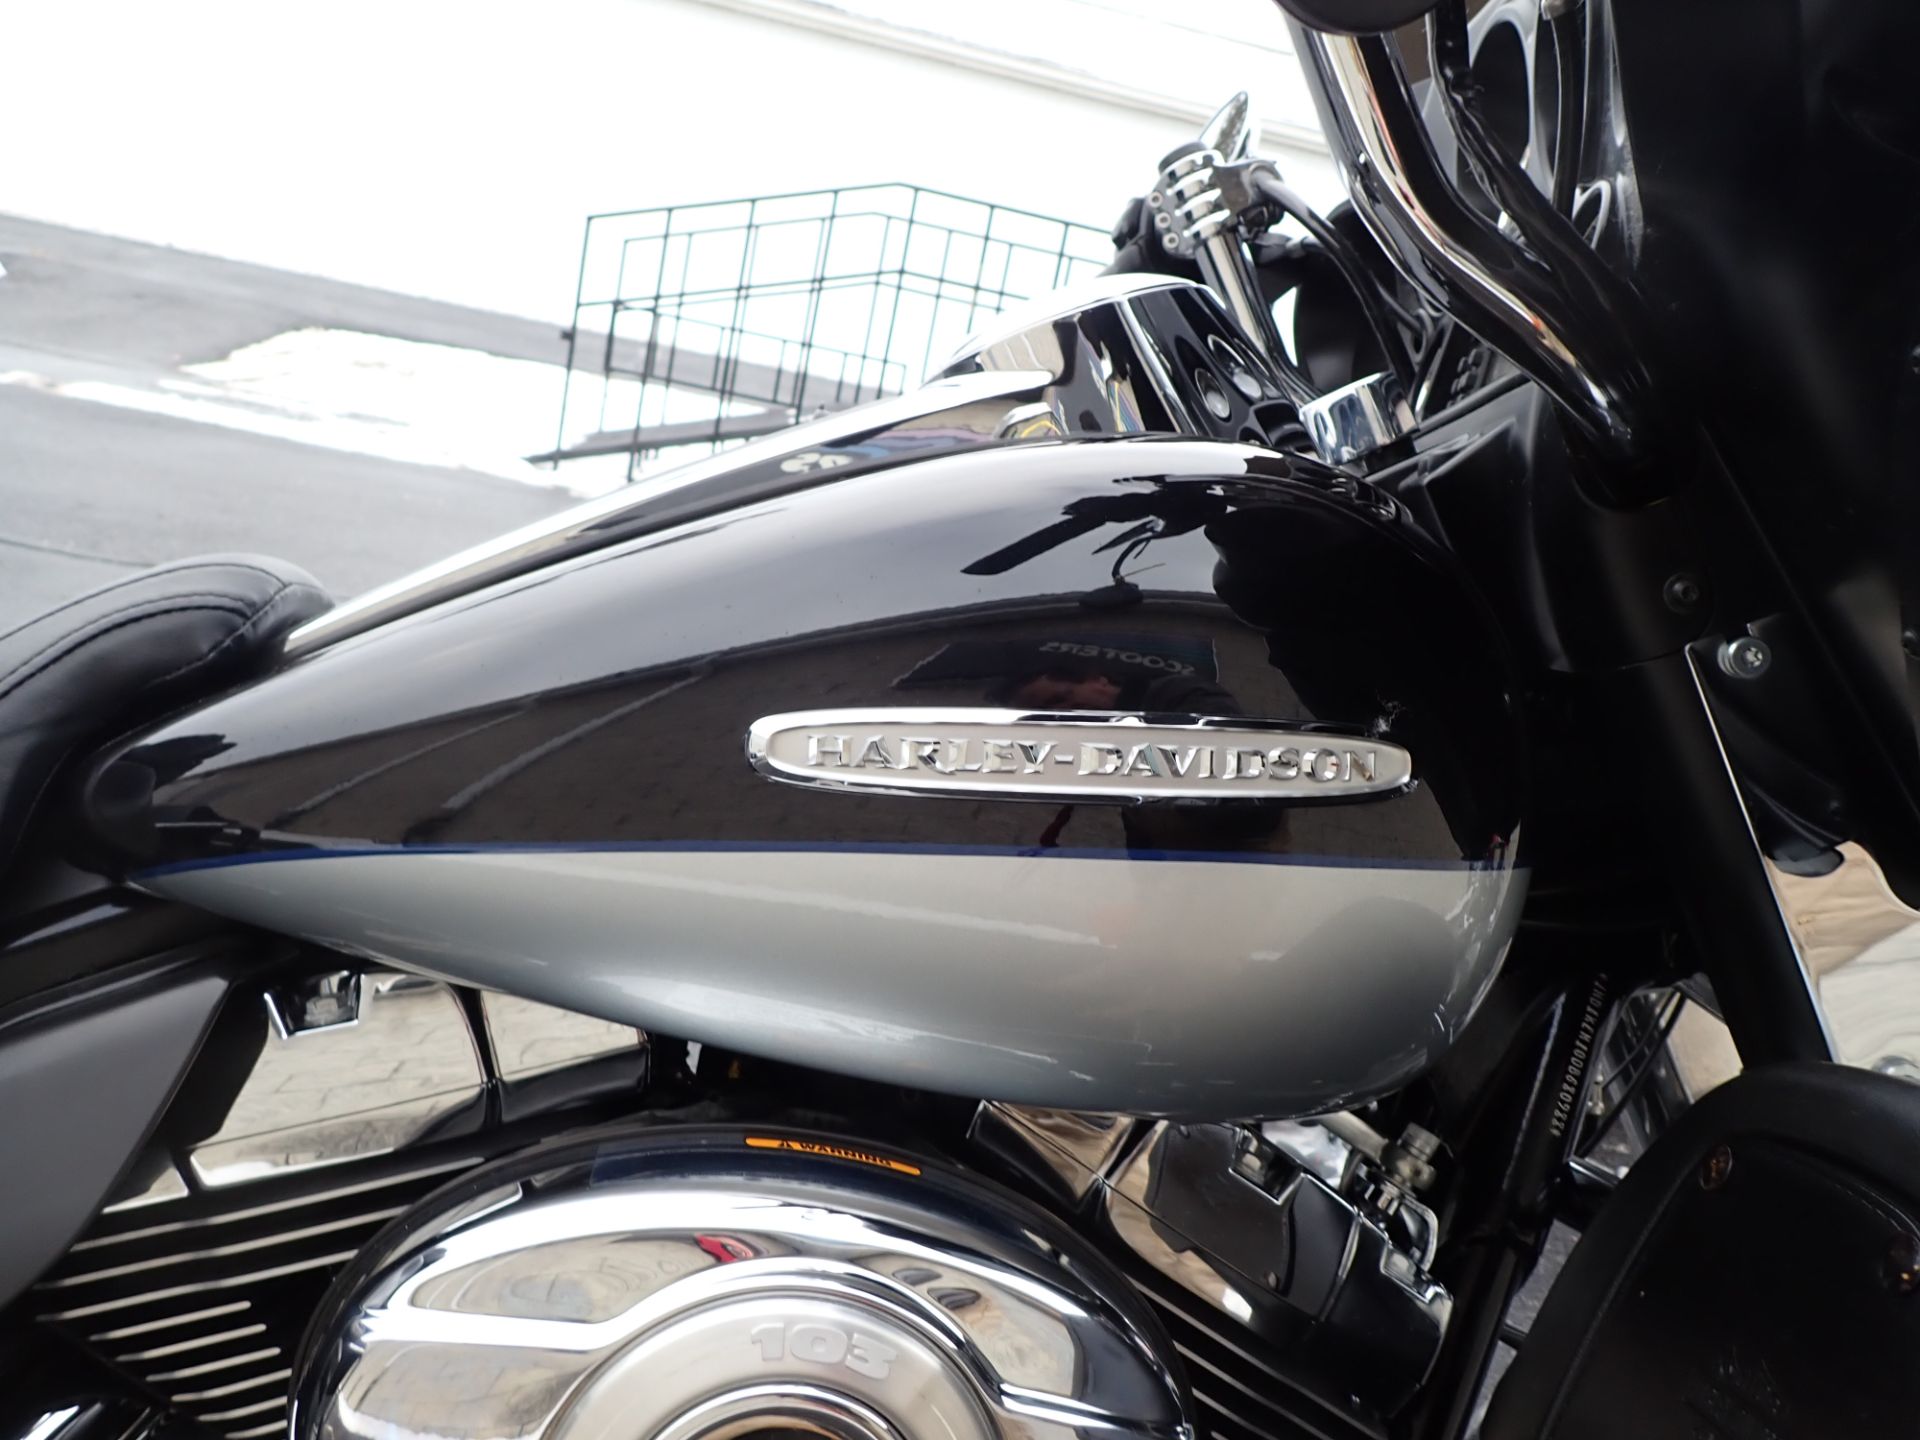 2013 Harley-Davidson Electra Glide® Ultra Limited in Massillon, Ohio - Photo 3